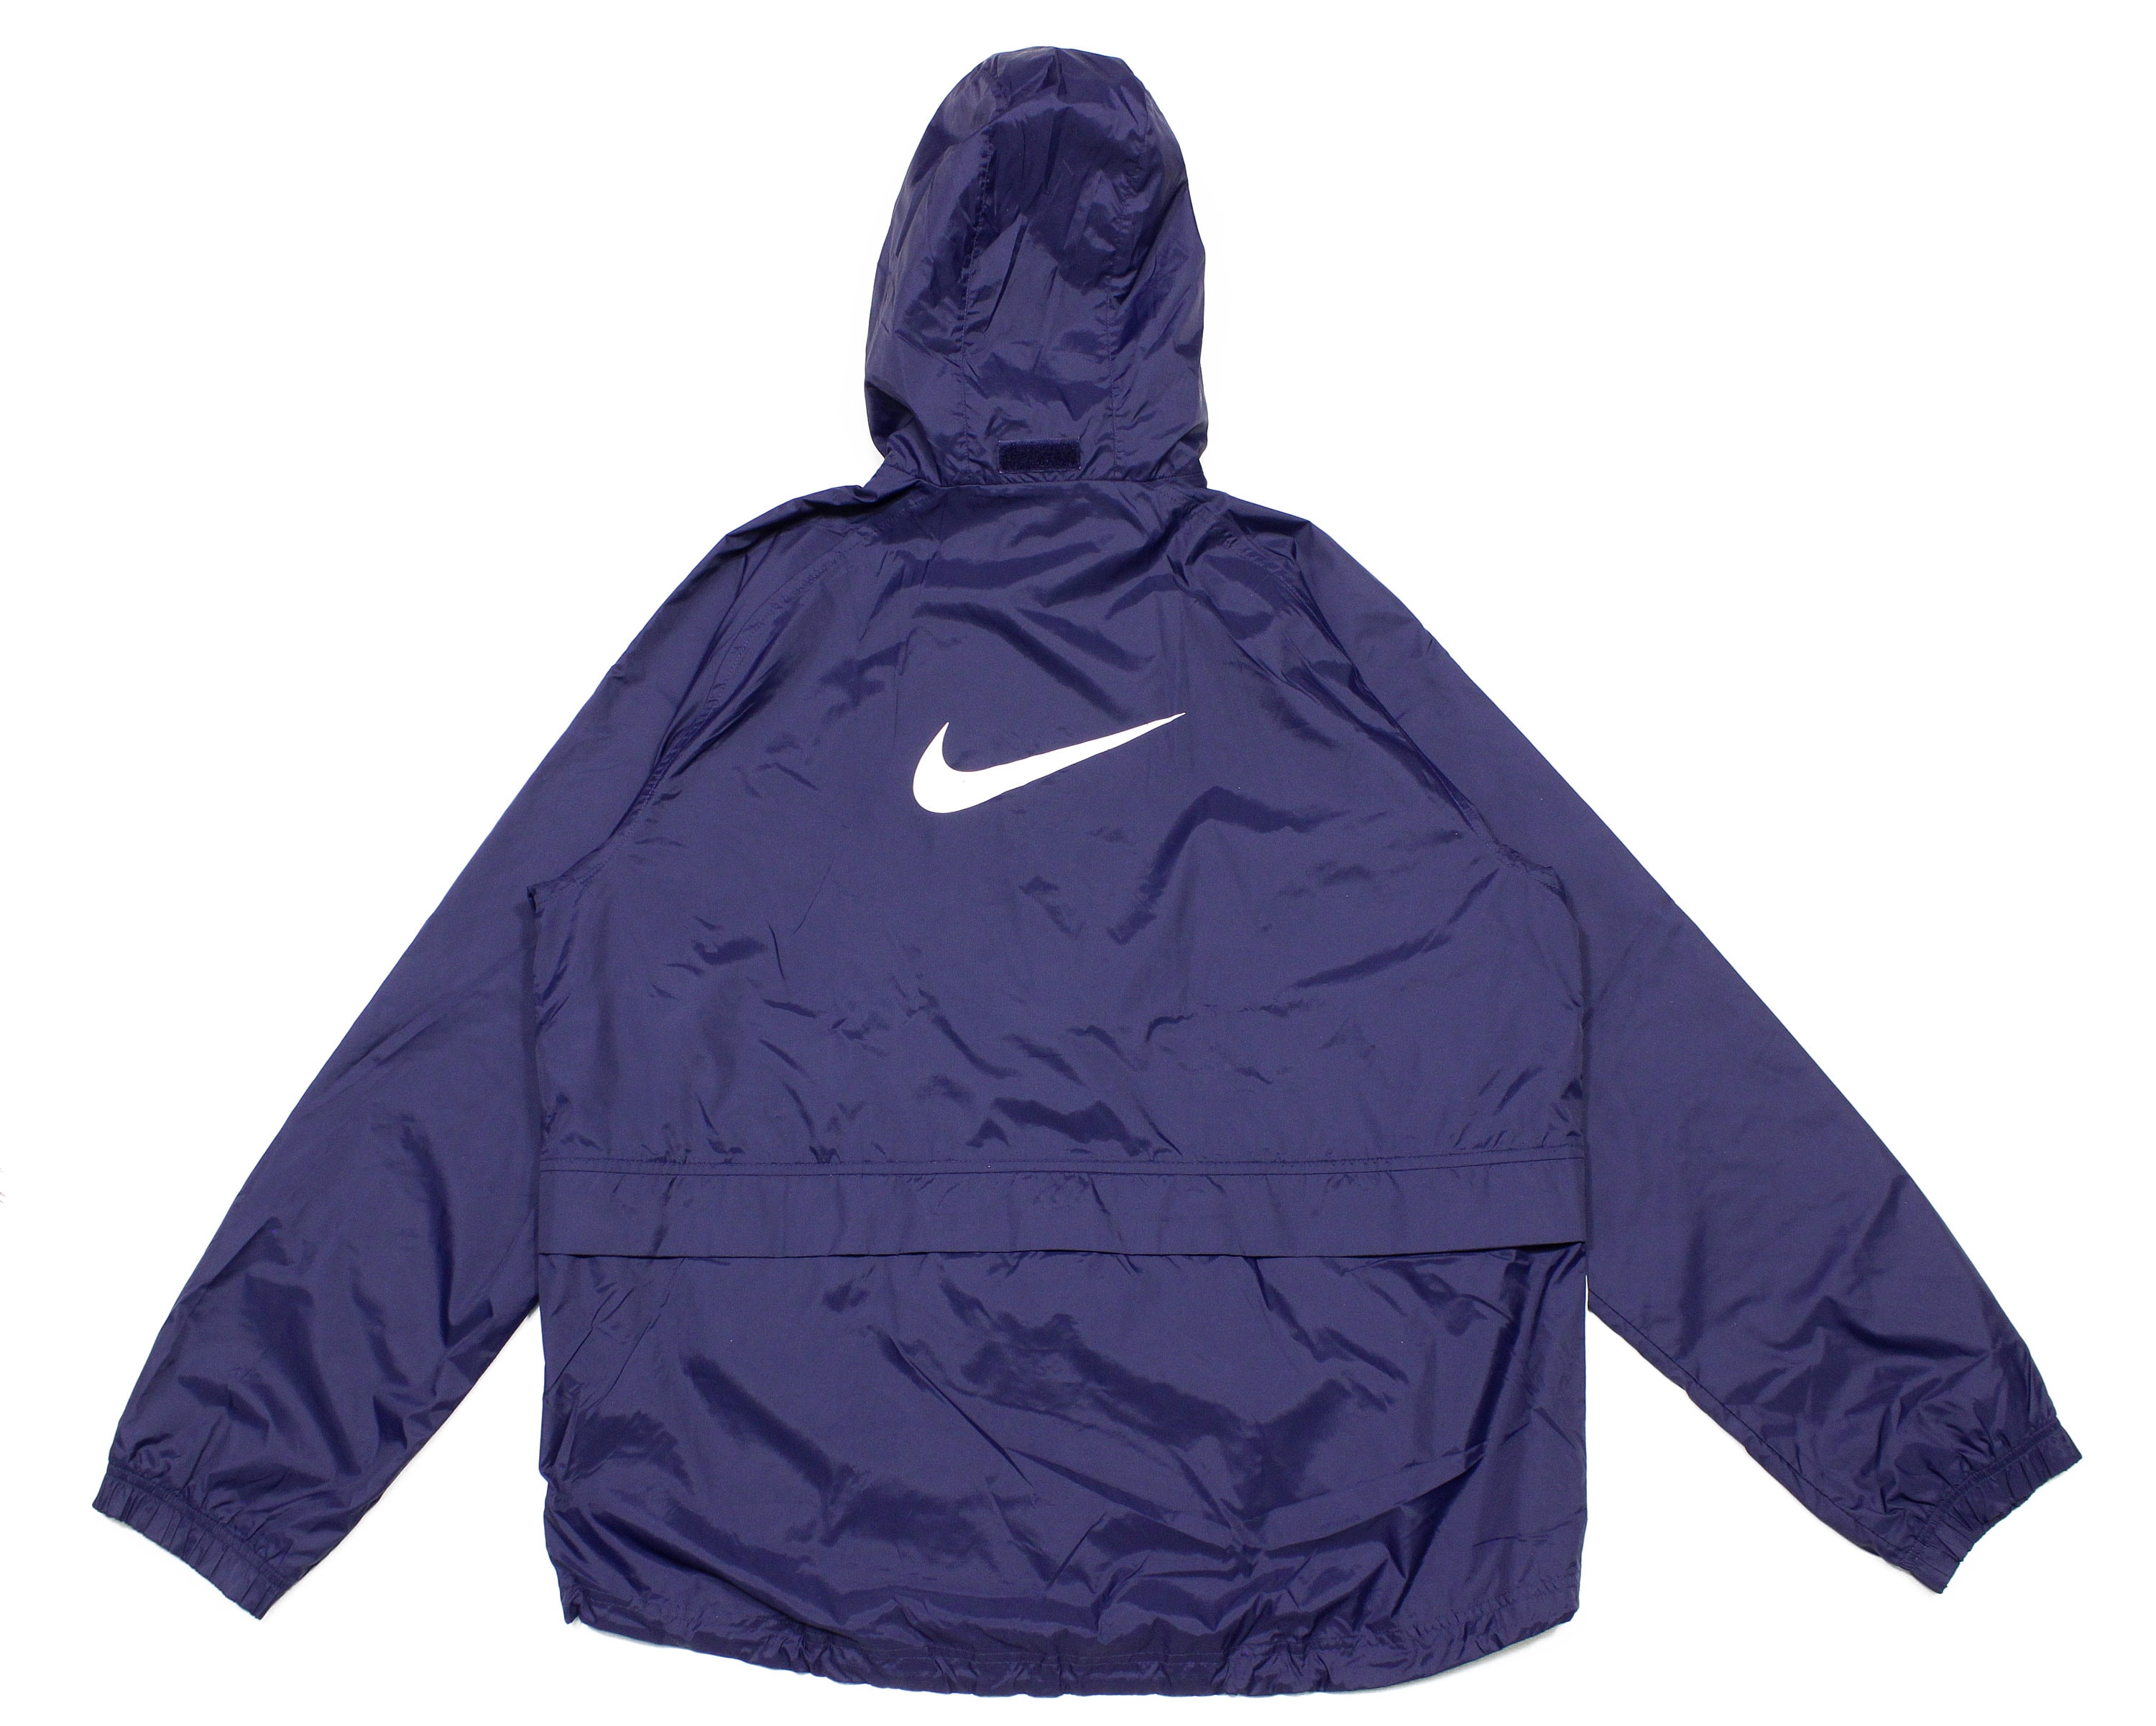 Nathaniel Ward diente Hecho un desastre Nike Vintage 90S Big Swoosh Packable Nylon Jacket - Etsy